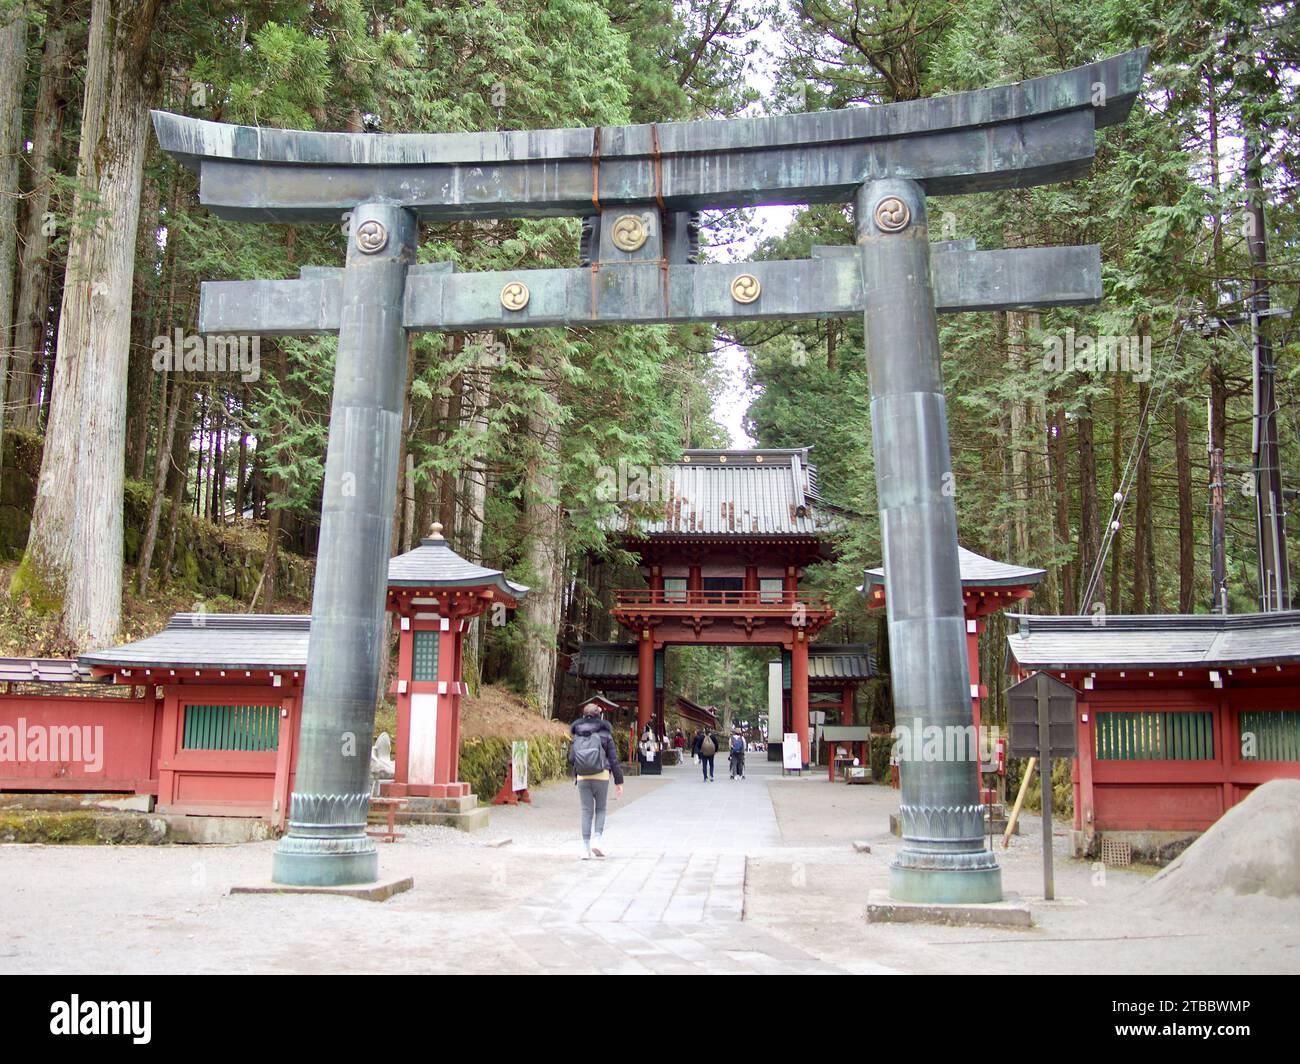 The front torii gate of the Futarasan Jinja shrine in Nikko, Japan. This shrine was founded in 767 by Shodo Shonin. Stock Photo